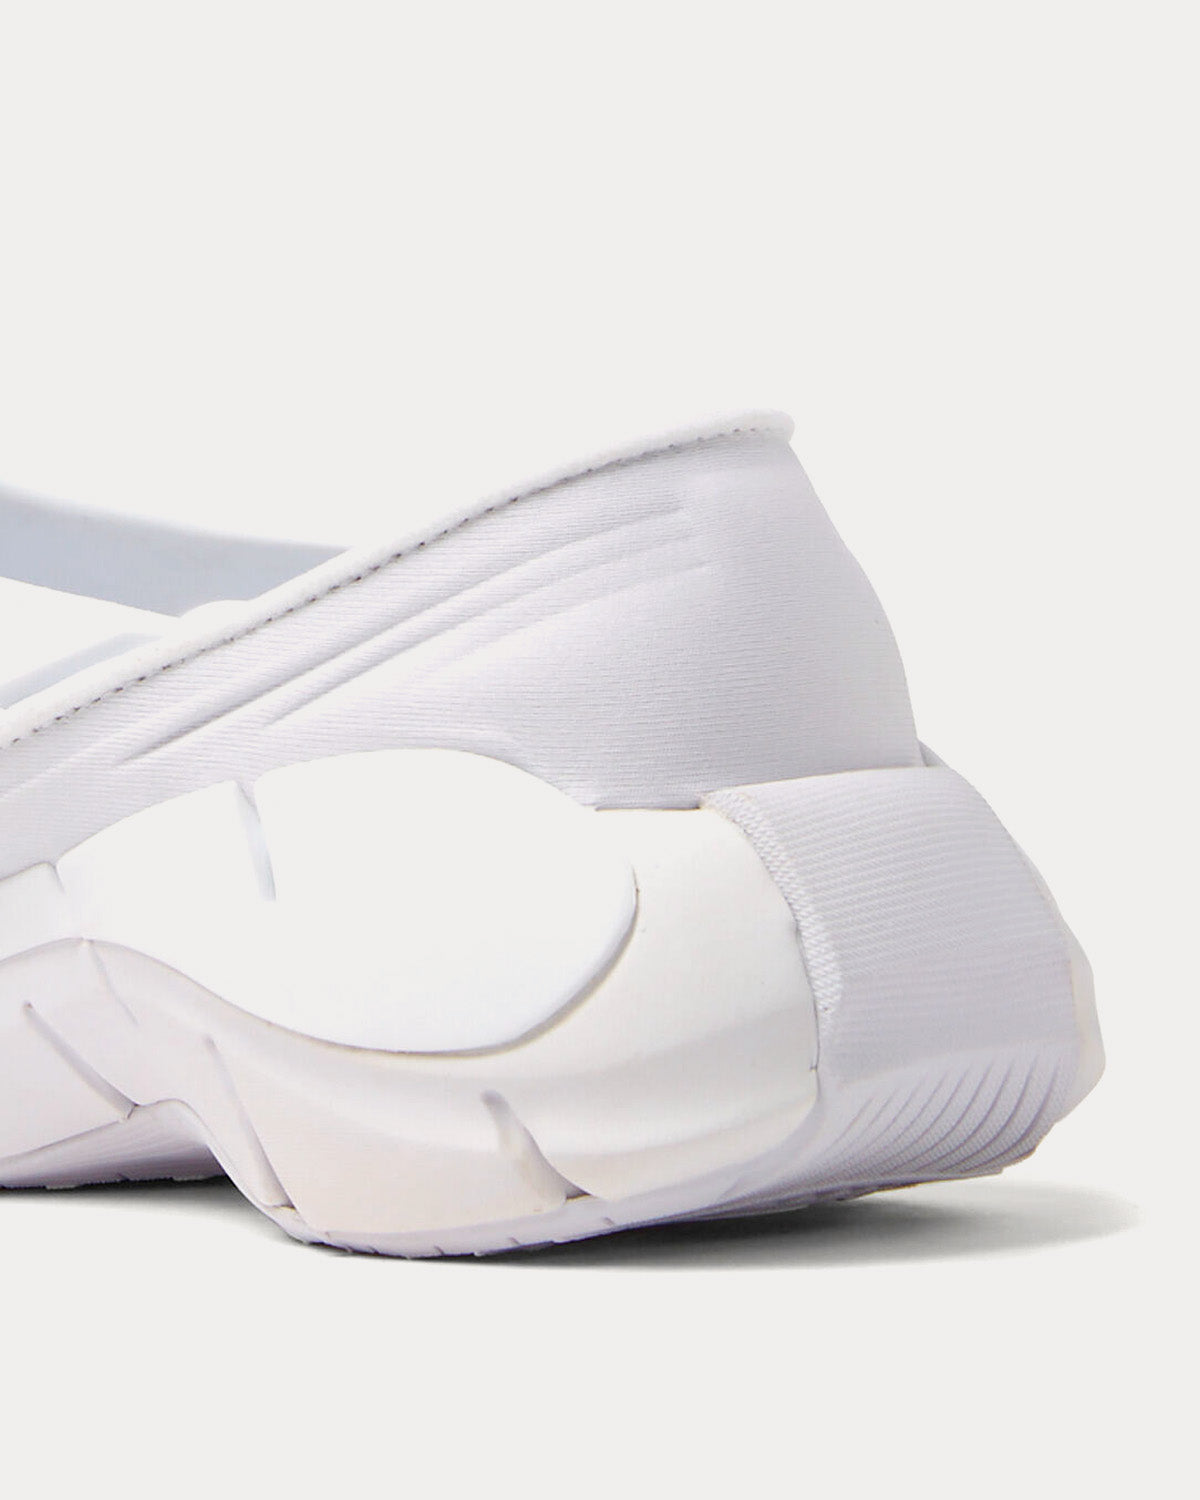 Reebok X Maison Margiela - Tier 1 Croafer White Slip On Sneakers